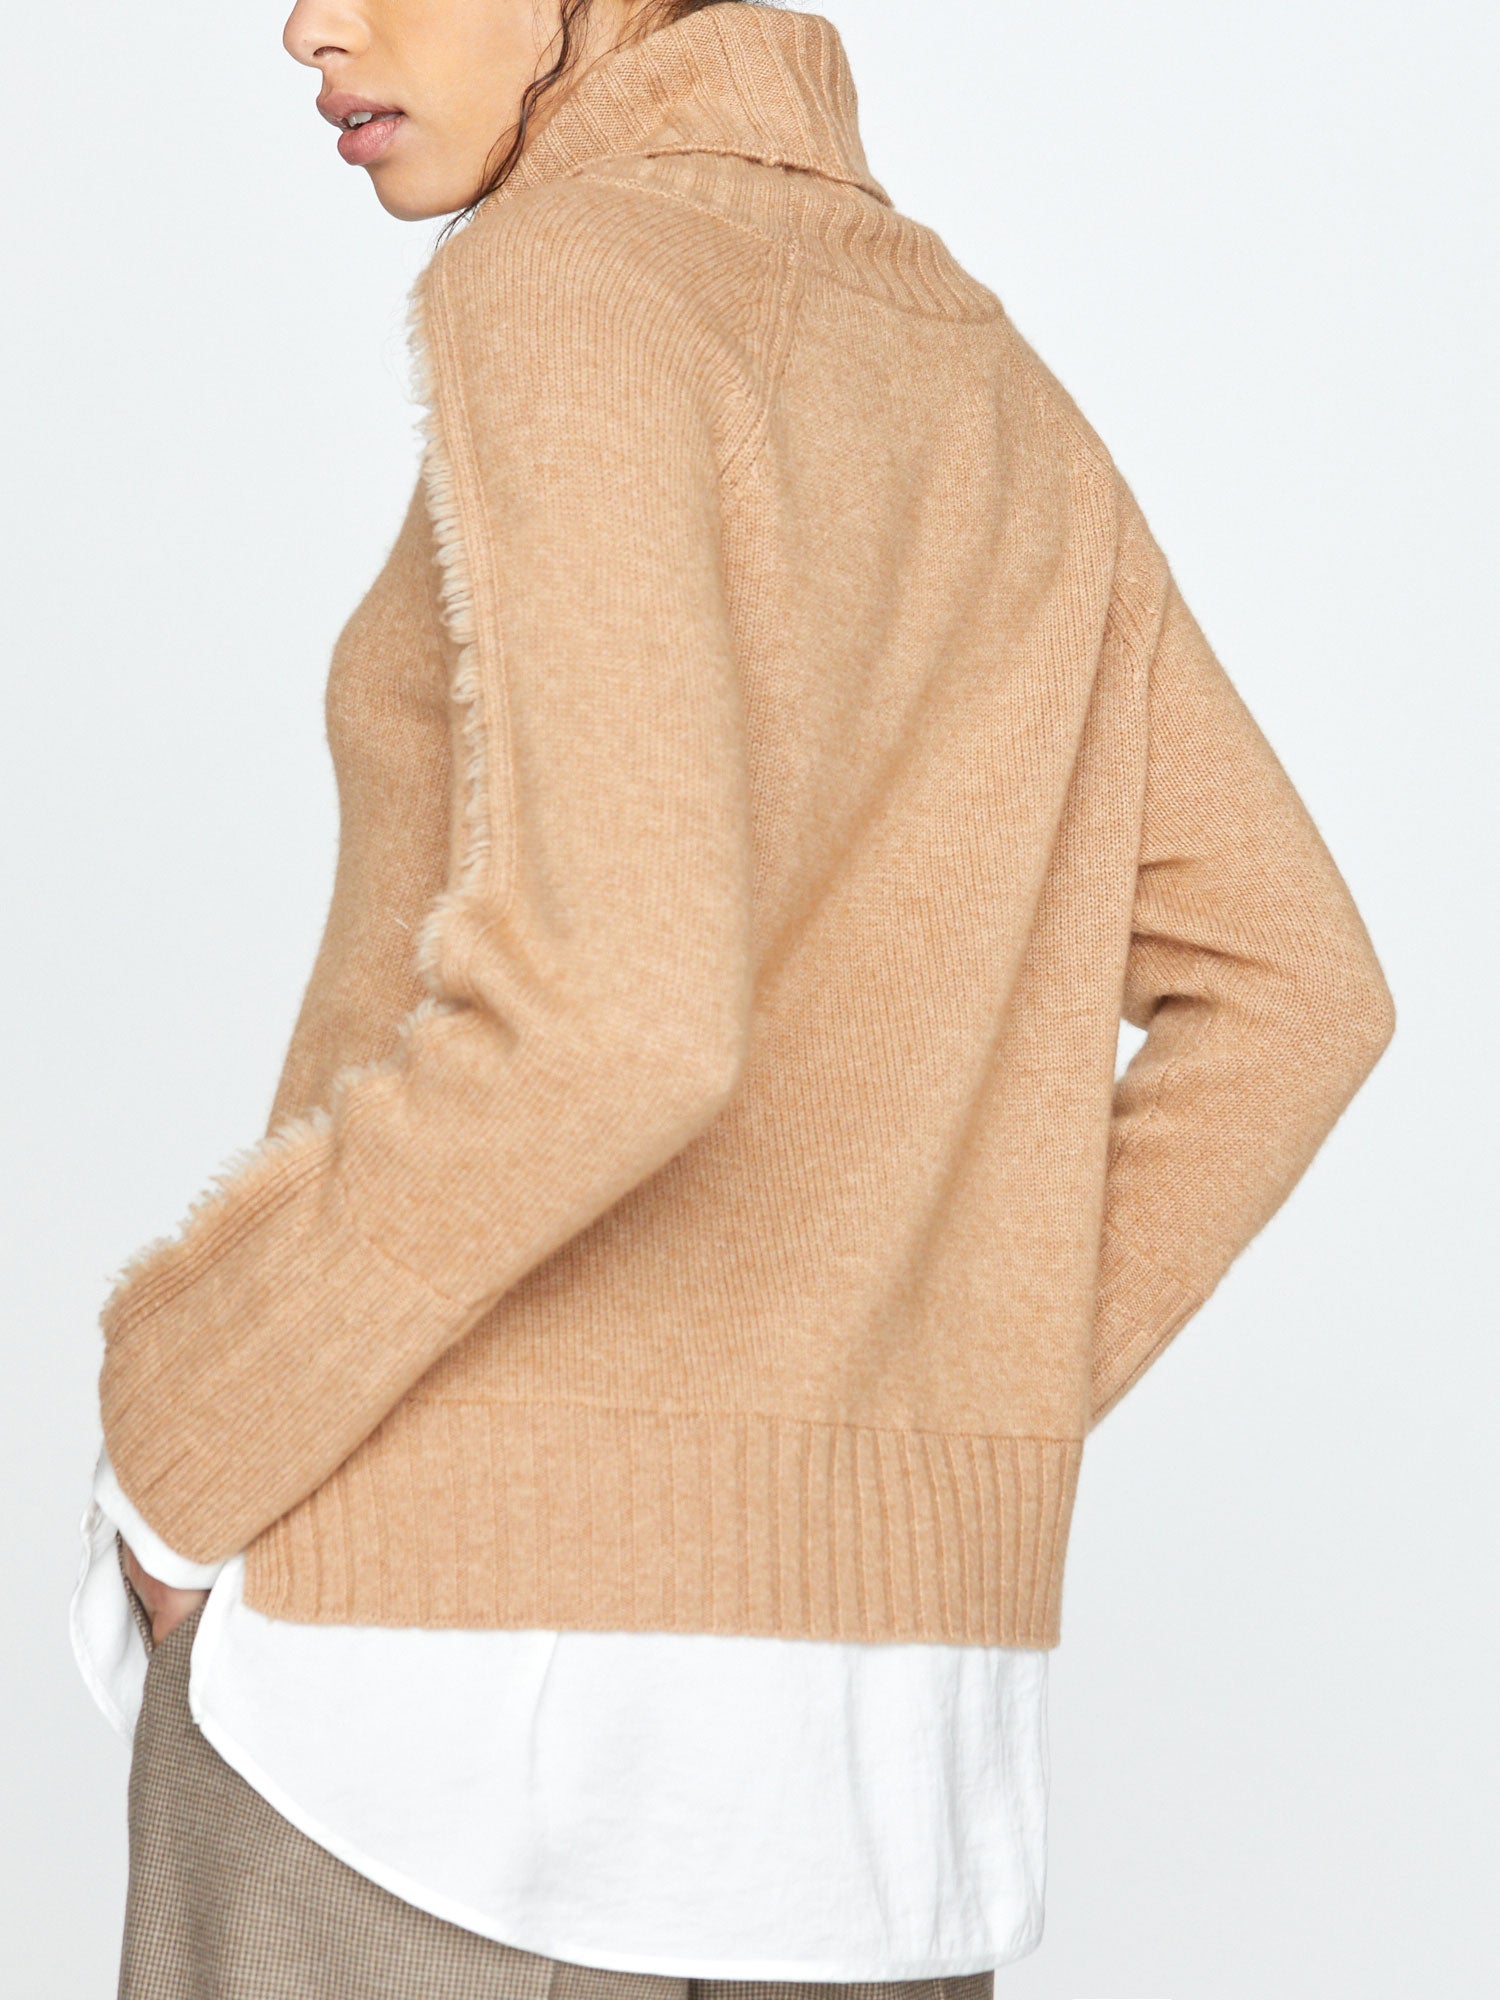 Jolie tan layered turtleneck sweater back view